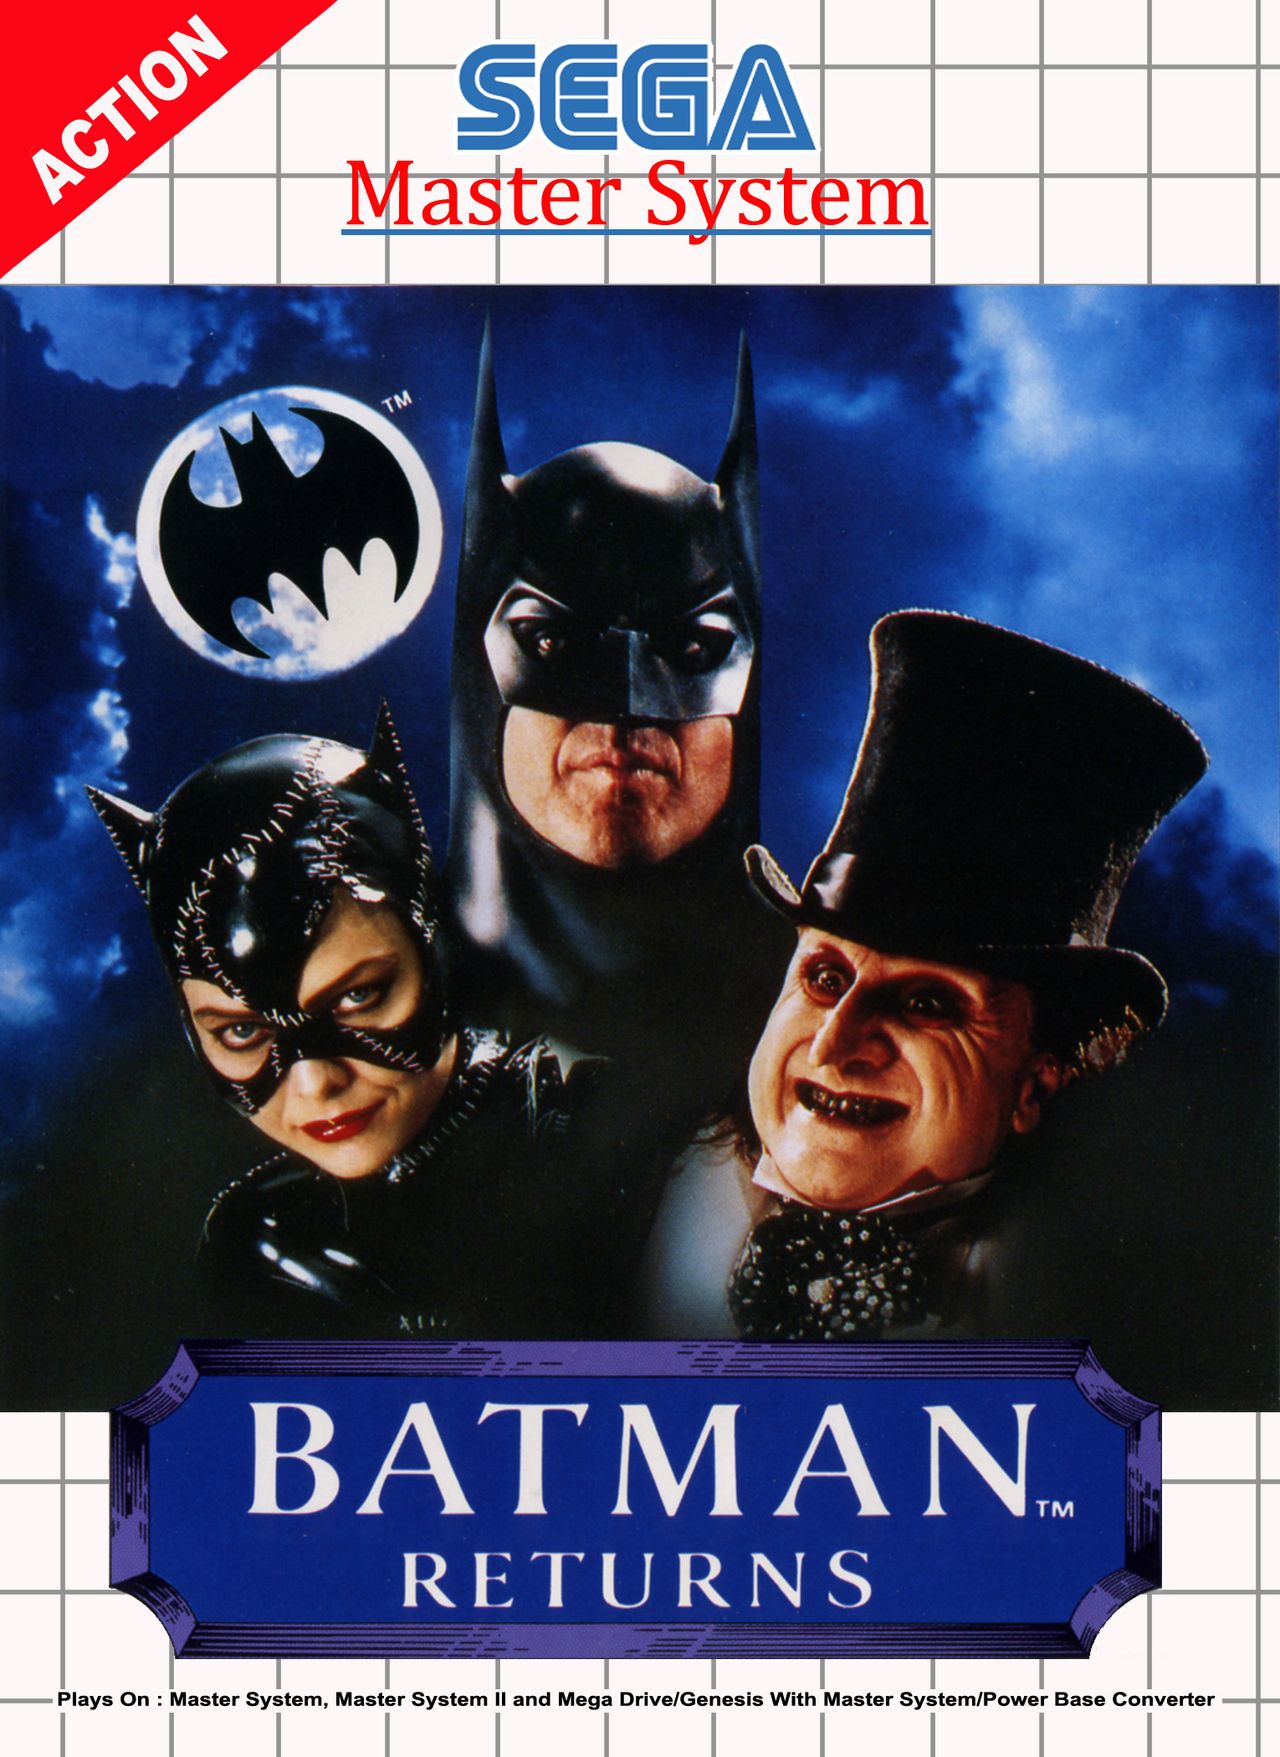 Batman Returns Covers, SEGA Master System :: DJ OldGames